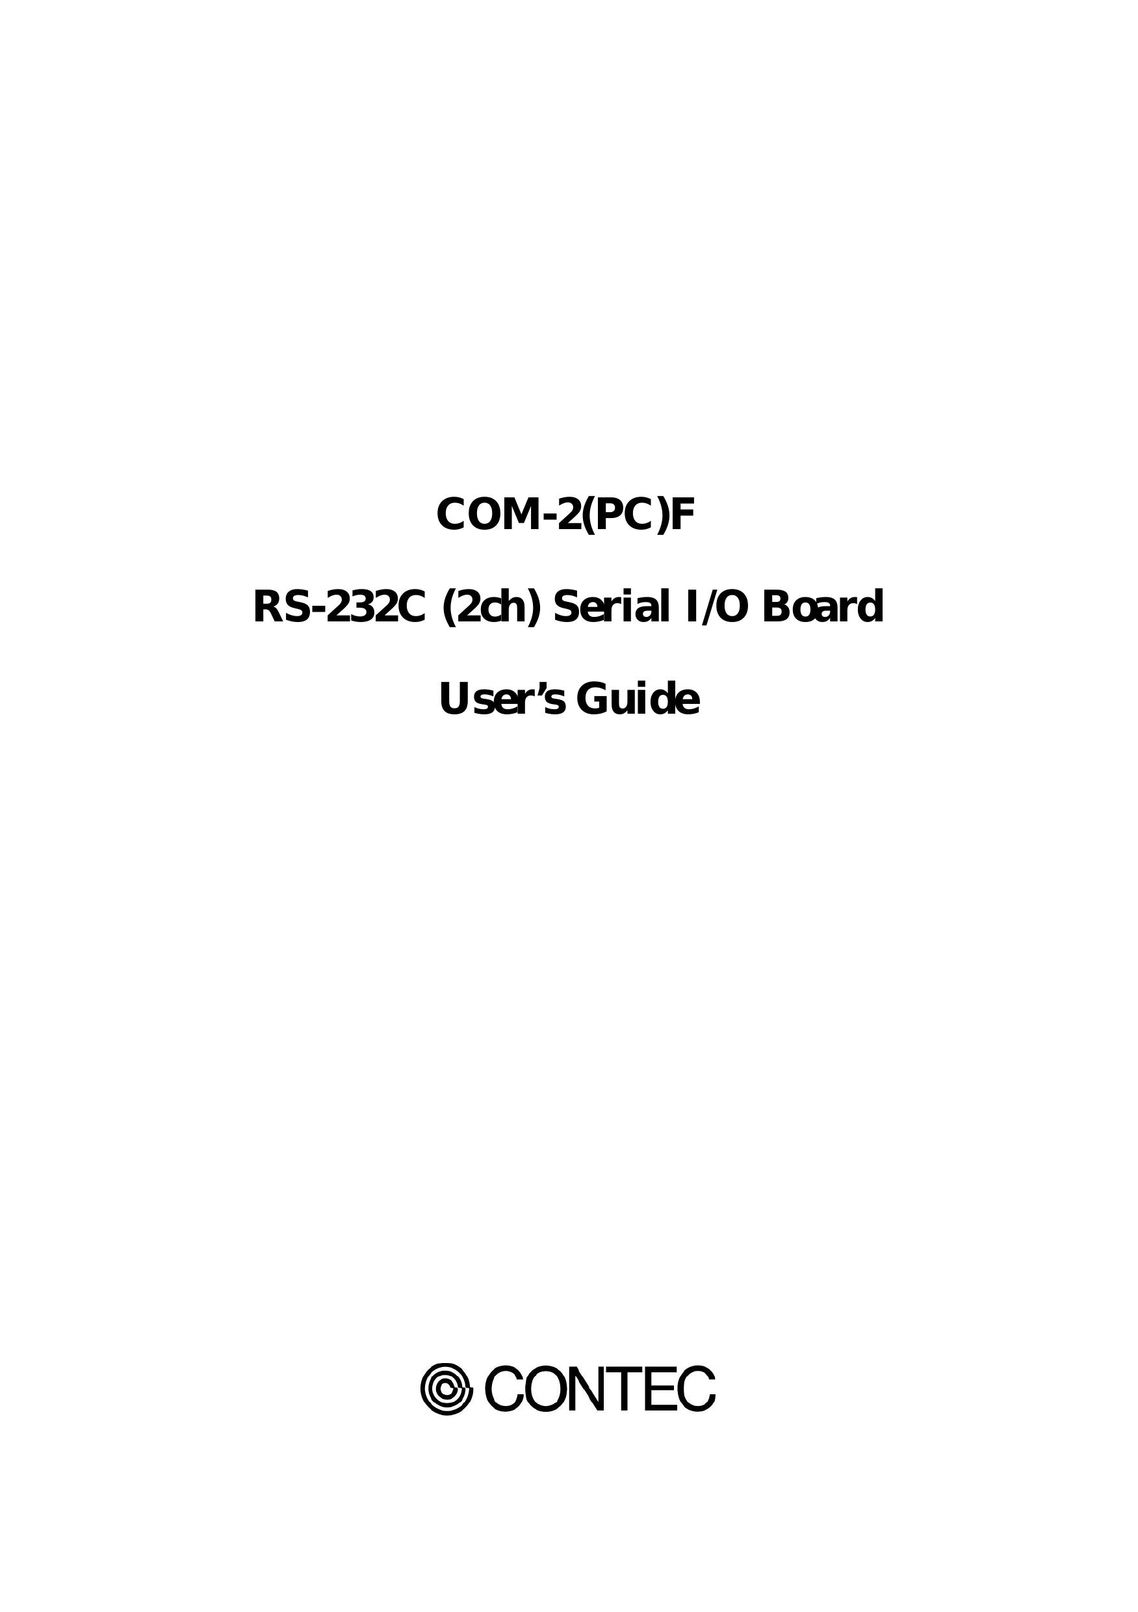 Compaq COM-2(PC)F Computer Hardware User Manual